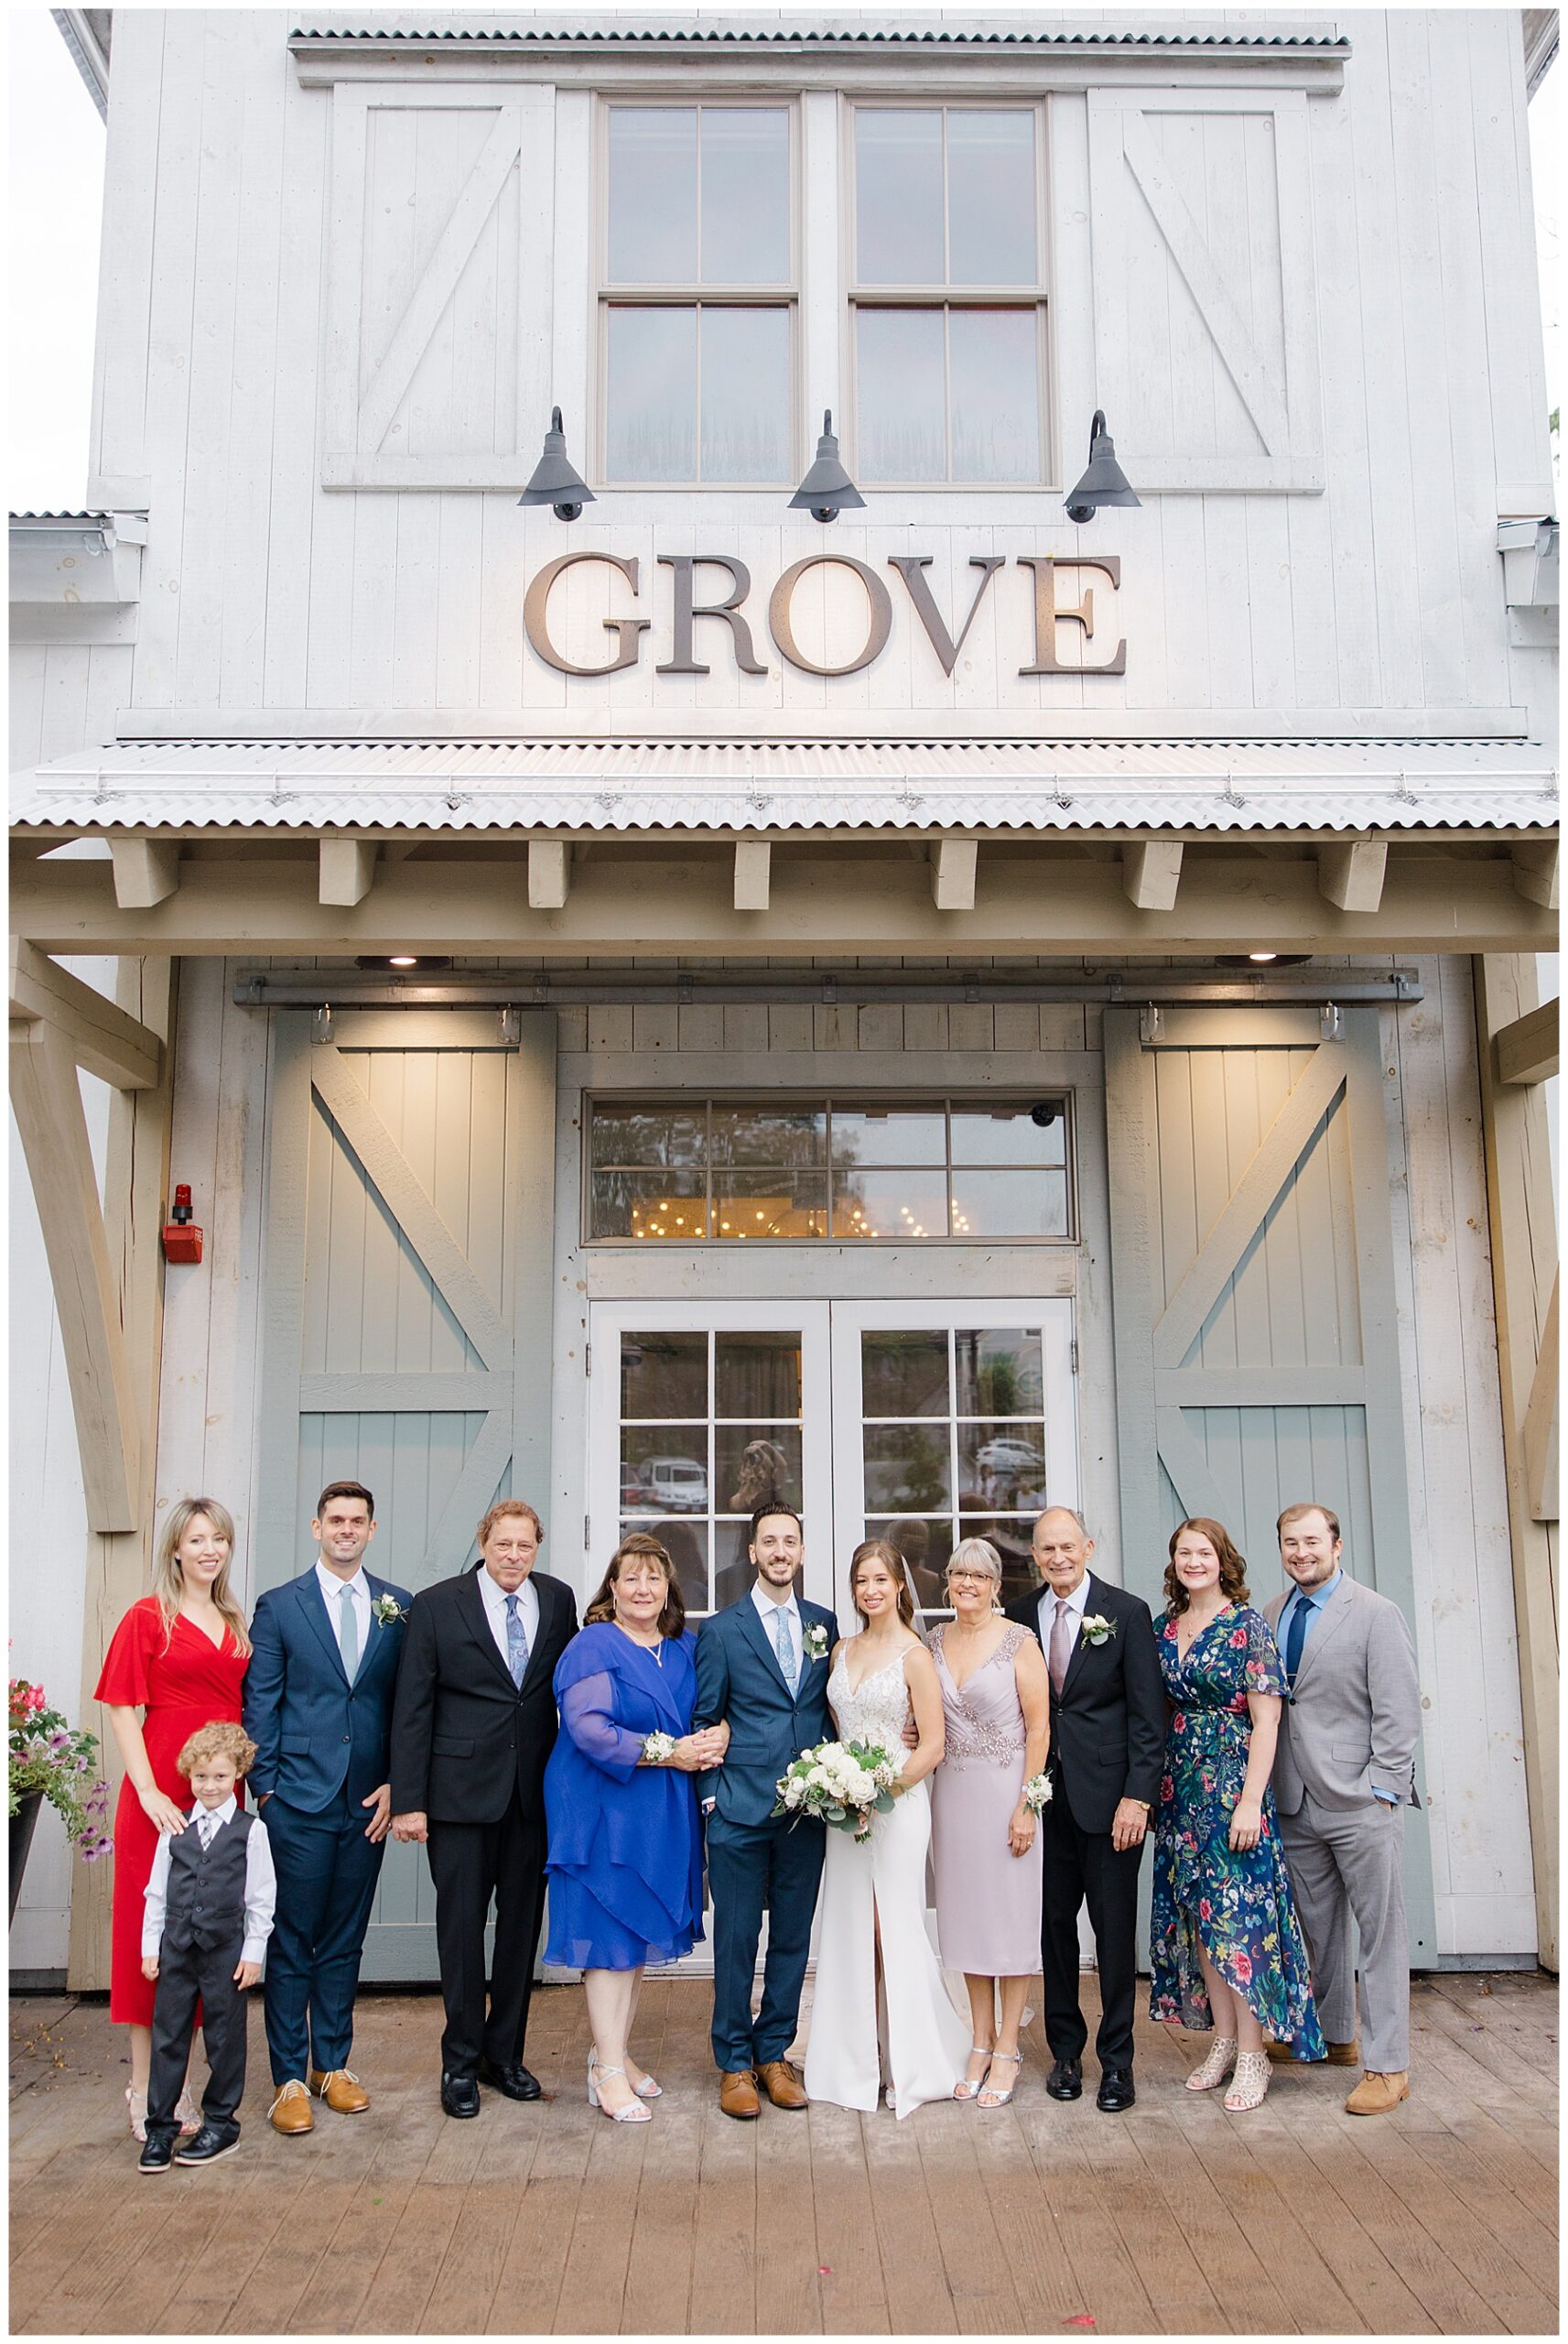 Family photos from Massachusetts Wedding at The Grove at Briar Barn Inn